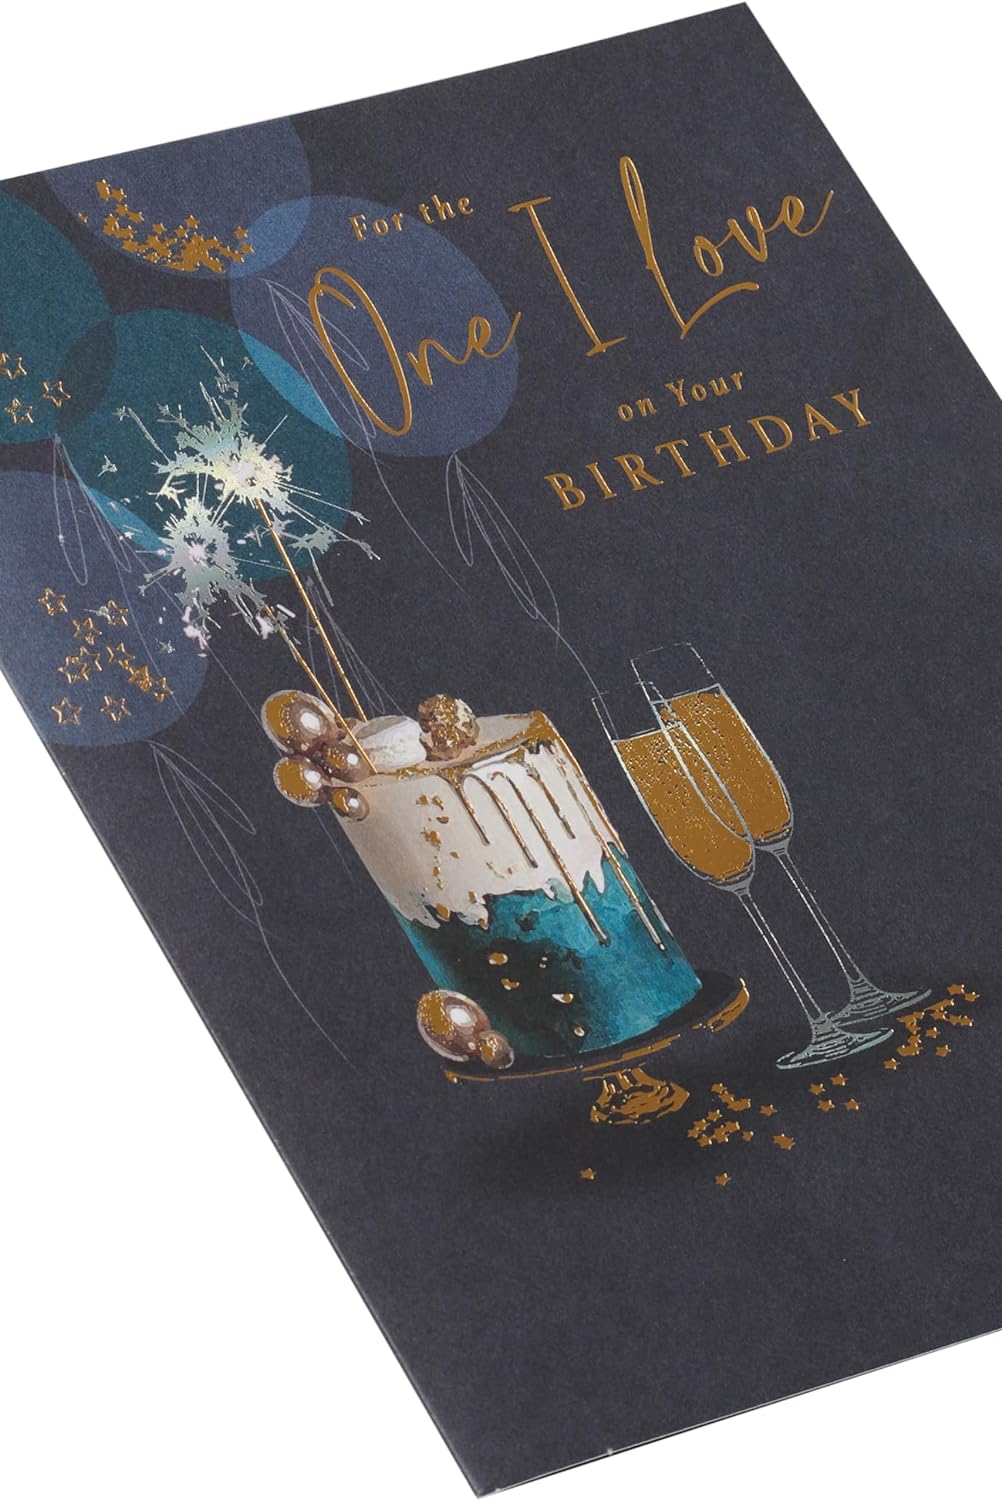 Luxury Cake Design One I Love Birthday Card